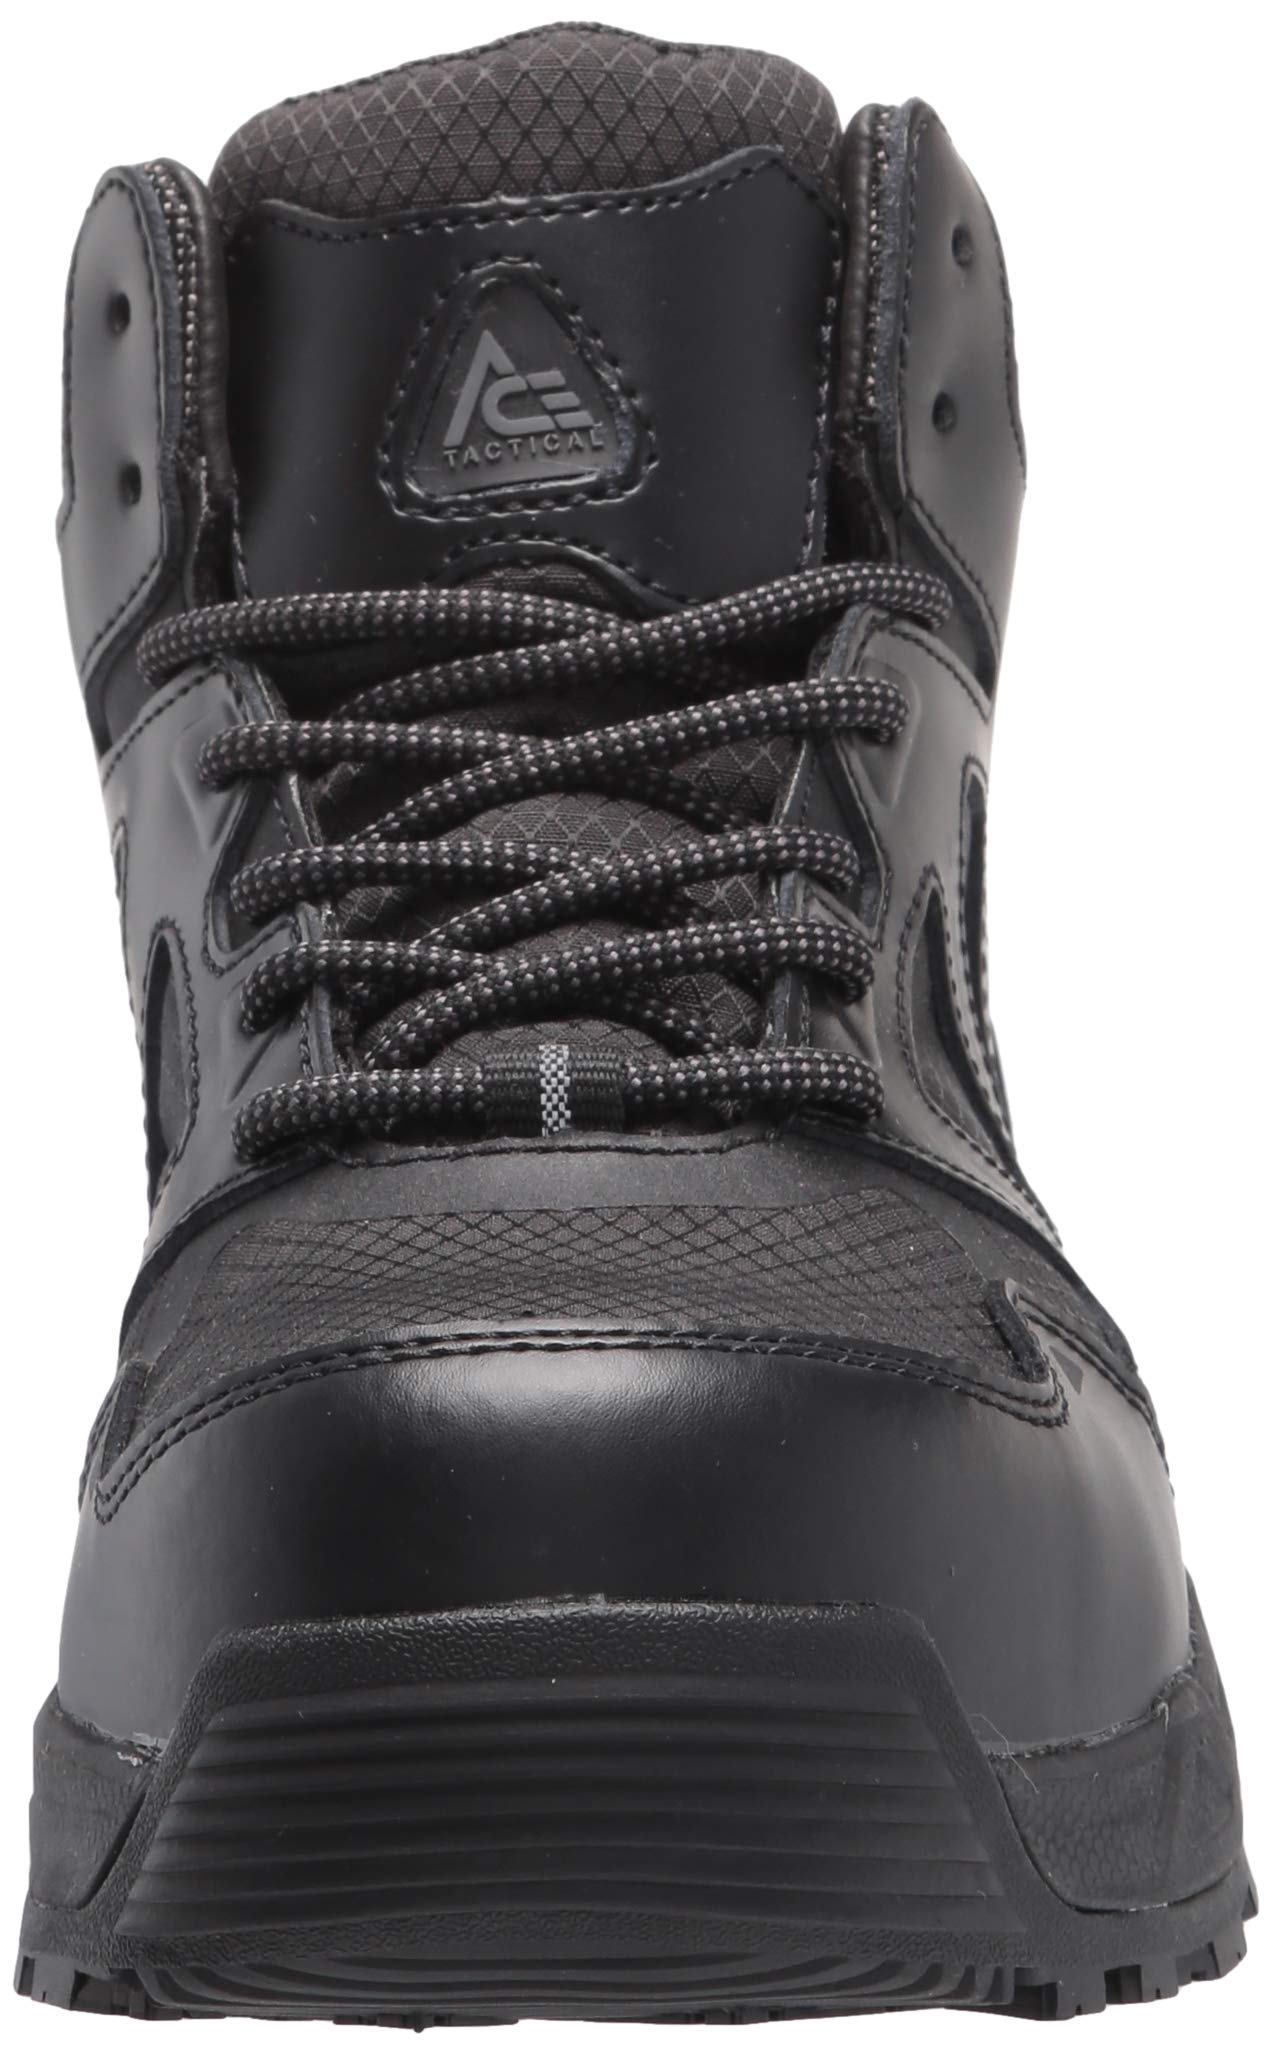 Shoes for Crews Defender Mid, Men's, Women's, Unisex Soft Toe (ST) and Nano Composite Toe (NCT) Work Shoes, Slip Resistant, Water Resistant, Black